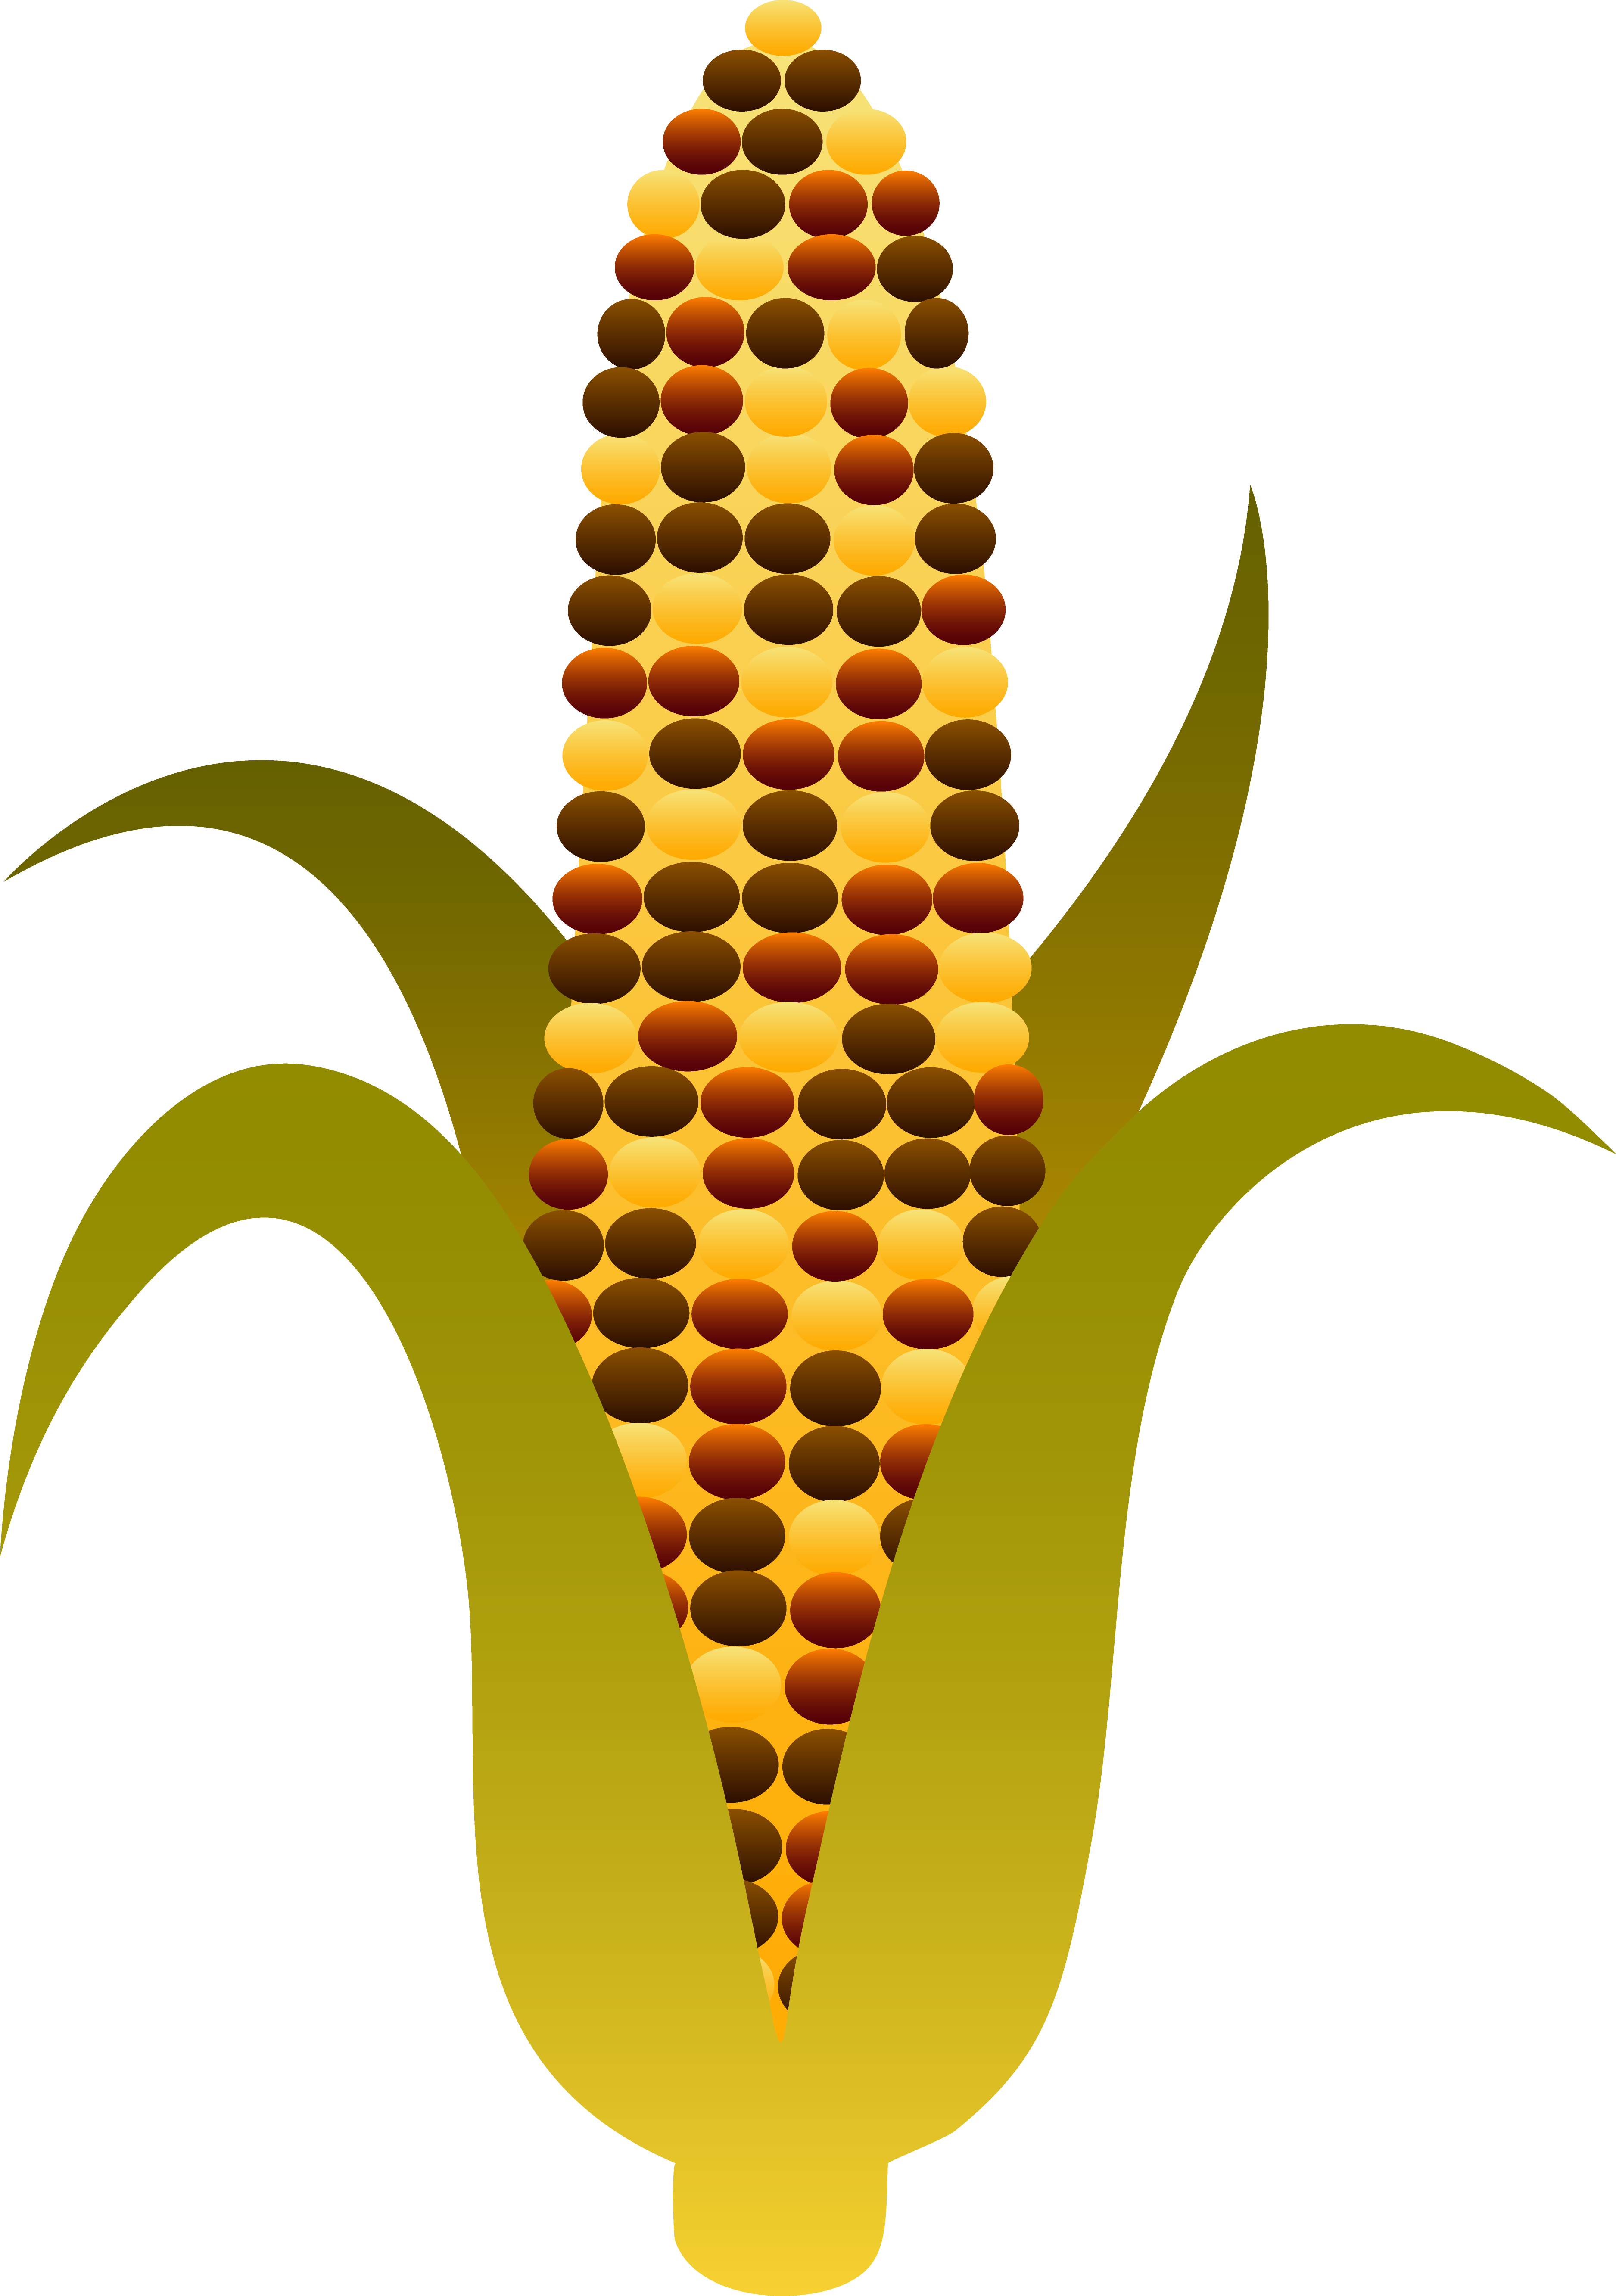 Plaque clipart cartoon. Indian harvest corn maize